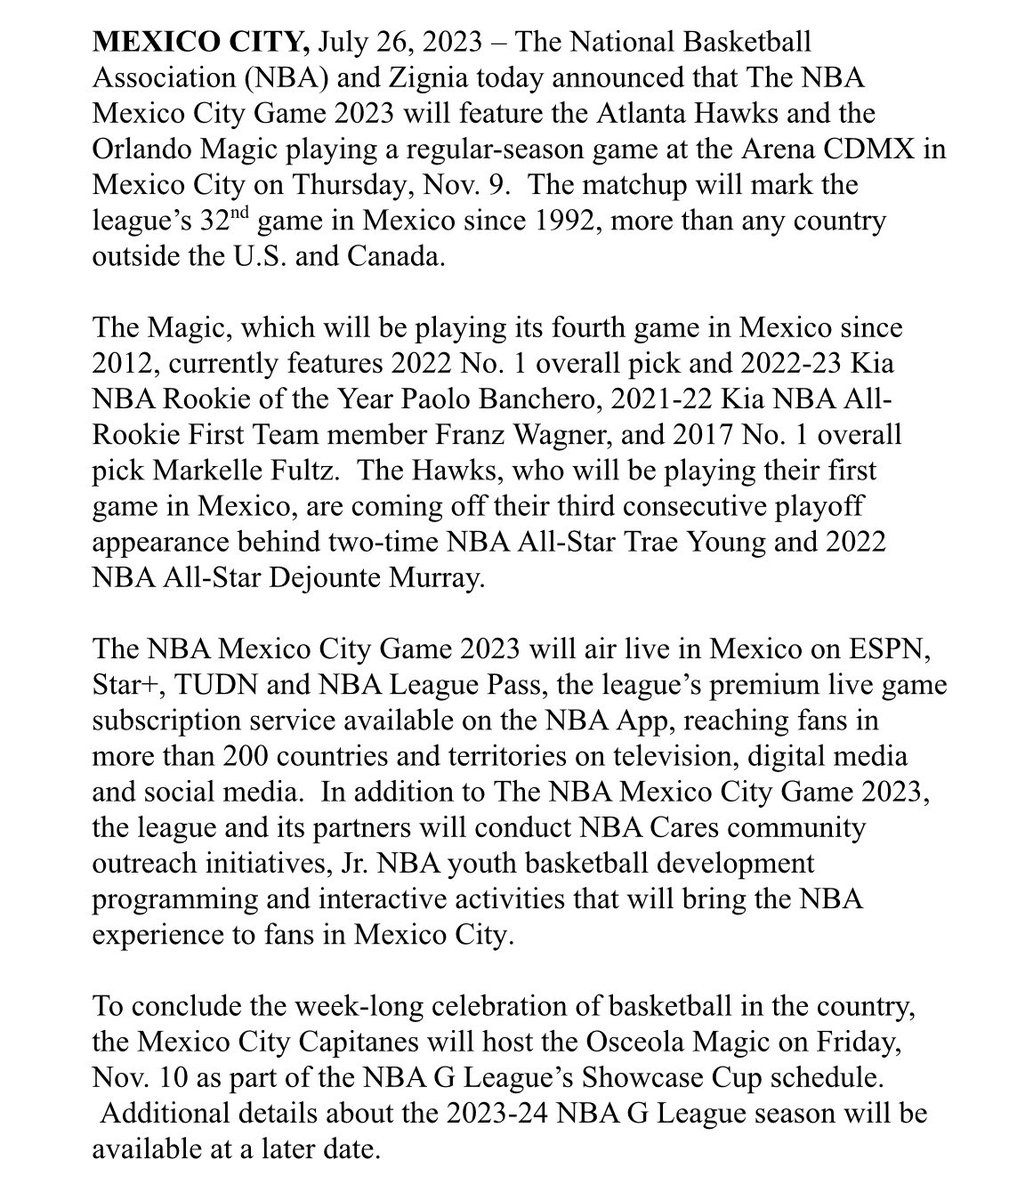 Hawks, Magic headed to Mexico City for NBA regular season game Nov